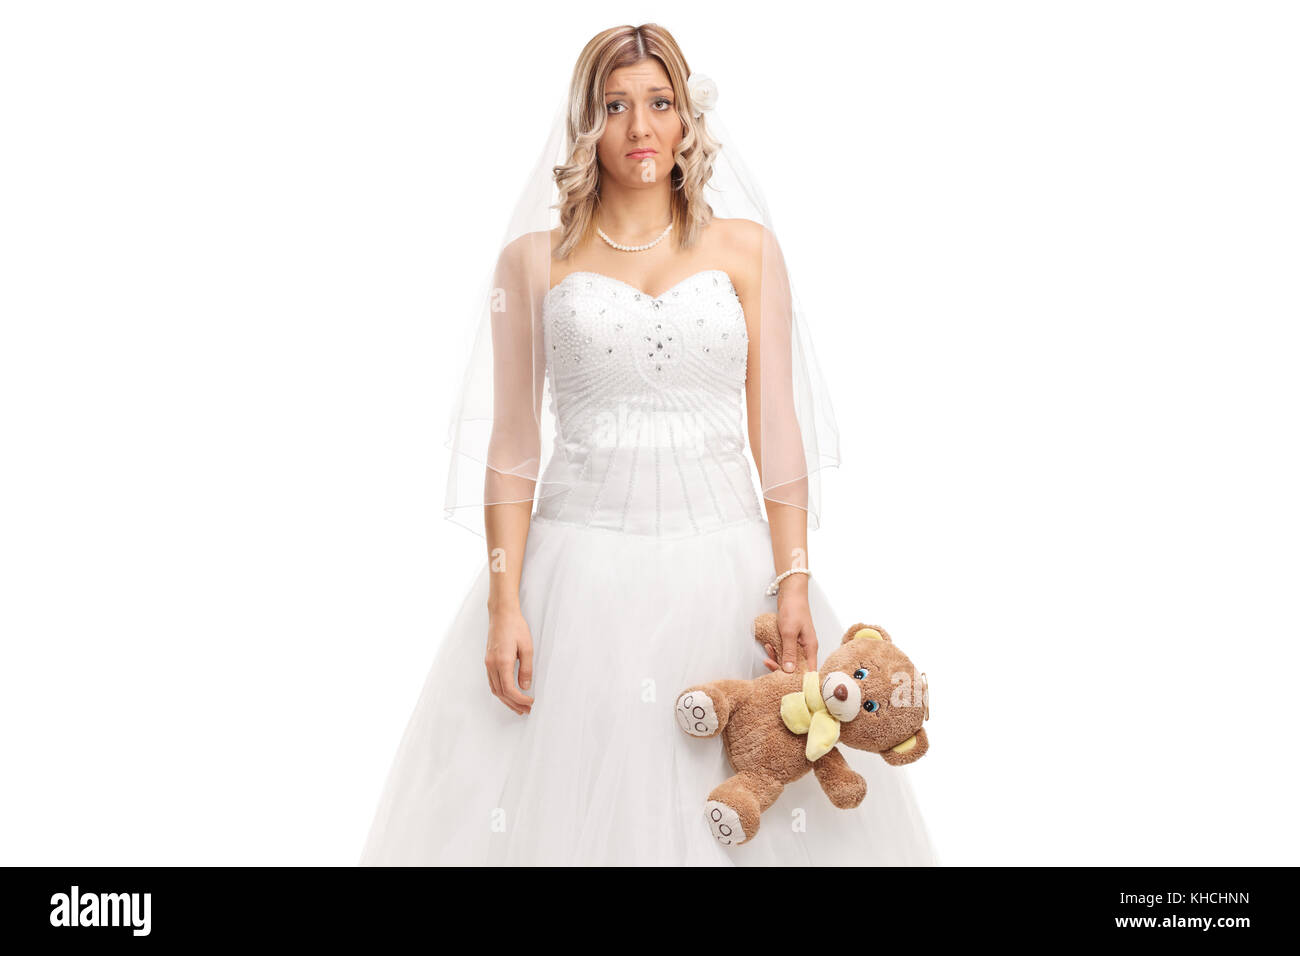 Sad young bride holding a teddy bear isolé sur fond blanc Banque D'Images